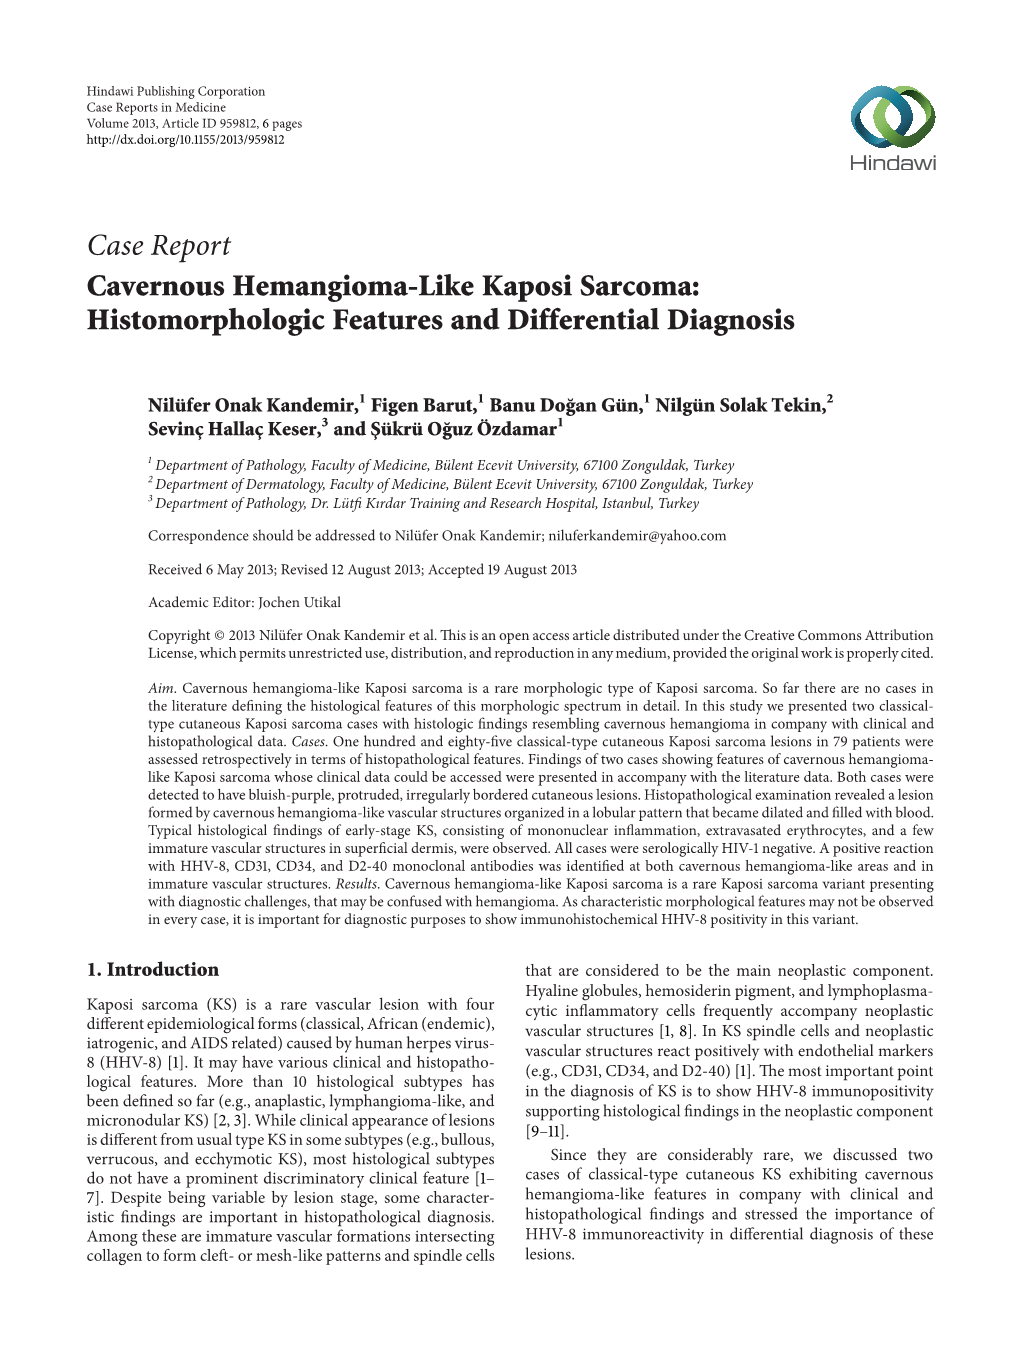 Cavernous Hemangioma-Like Kaposi Sarcoma: Histomorphologic Features and Differential Diagnosis